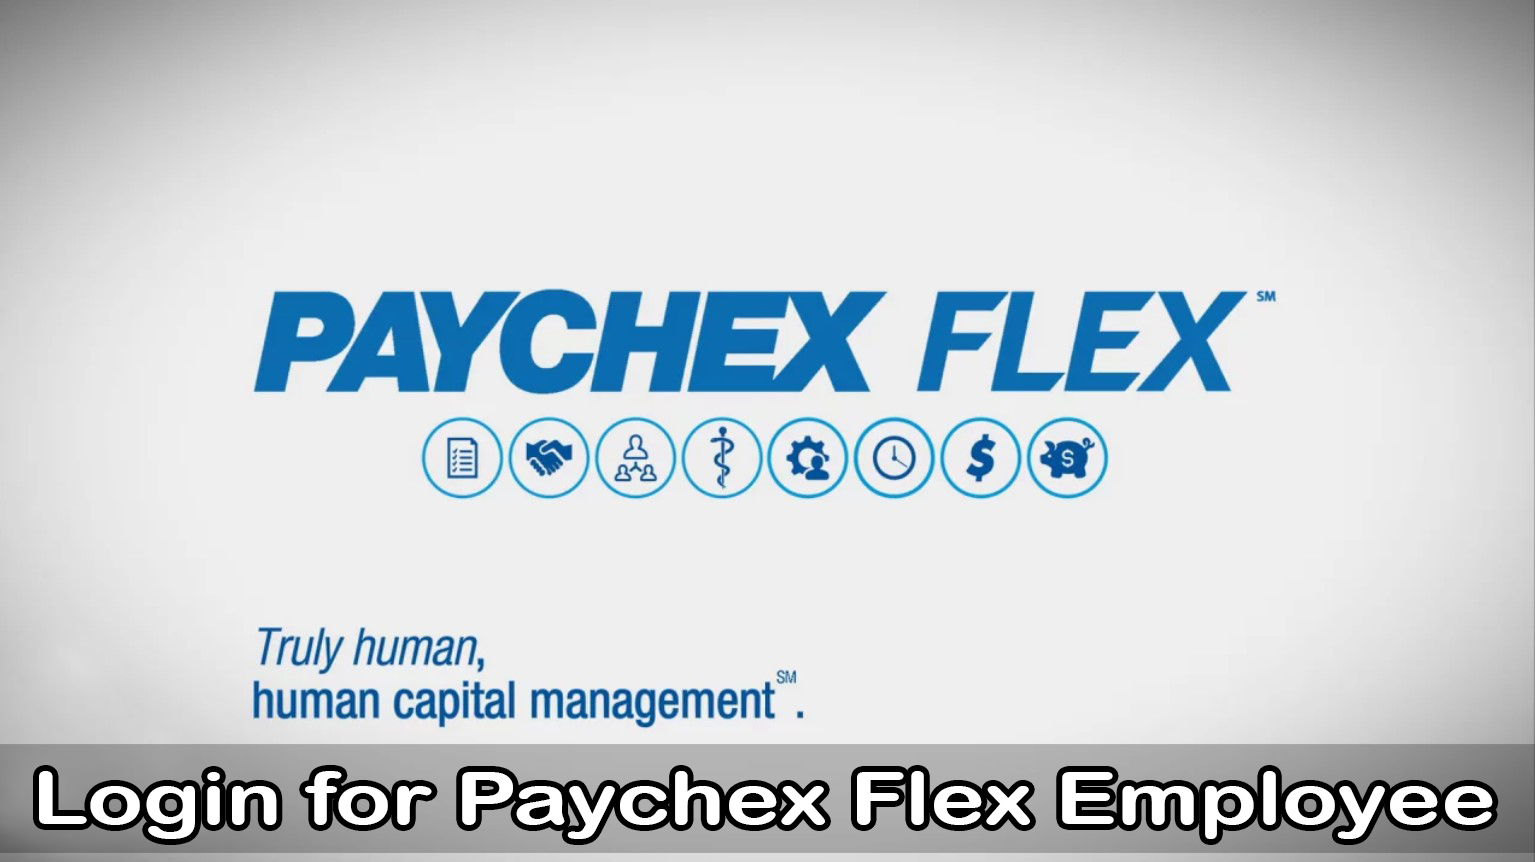 Login for Paychex Flex Employee